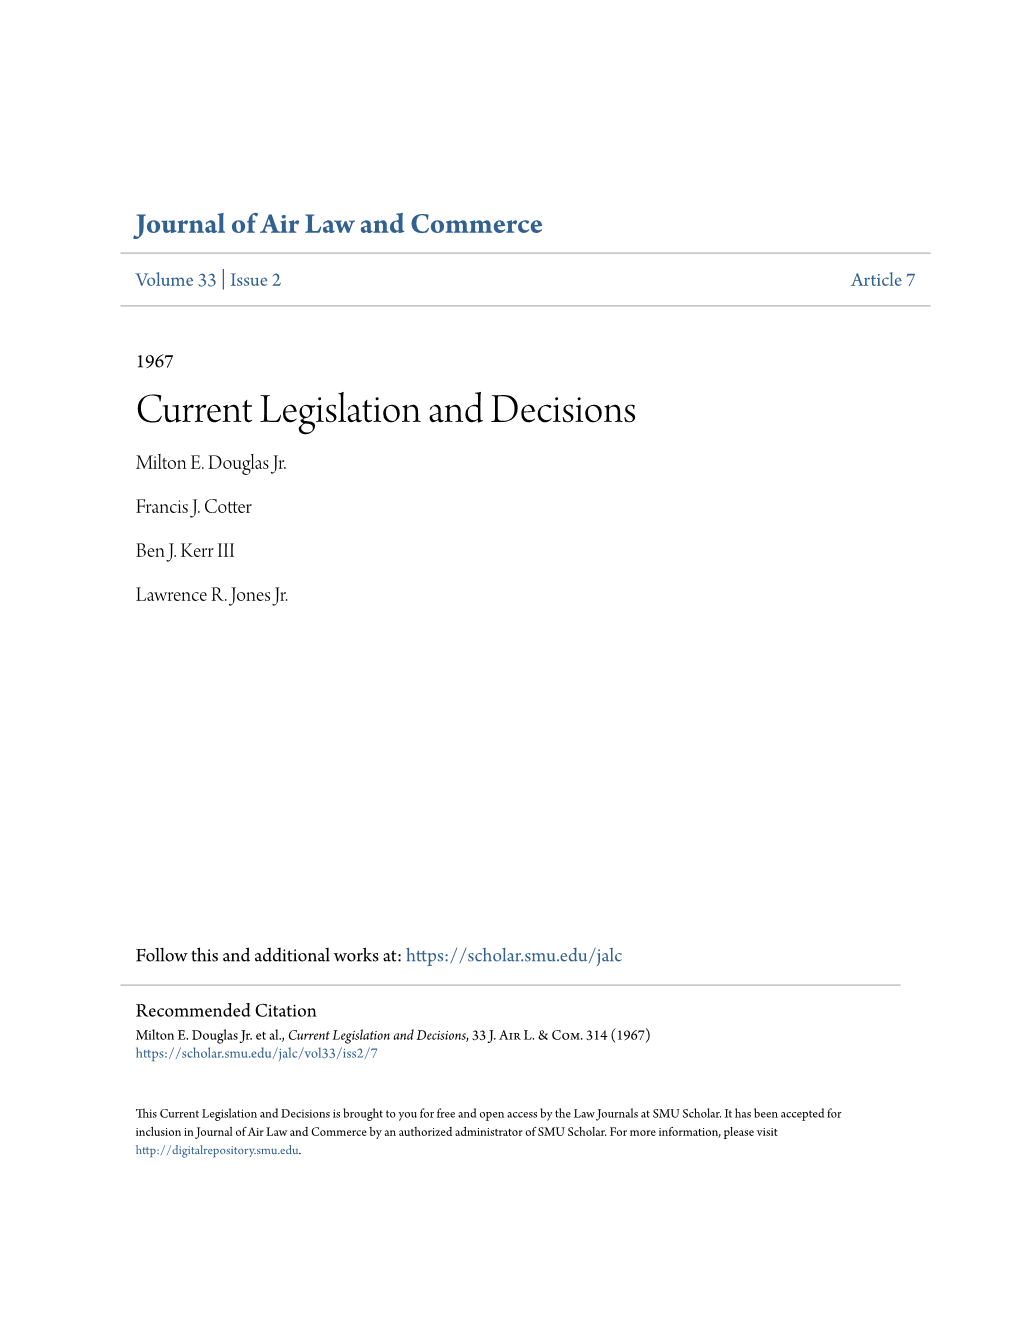 Current Legislation and Decisions Milton E